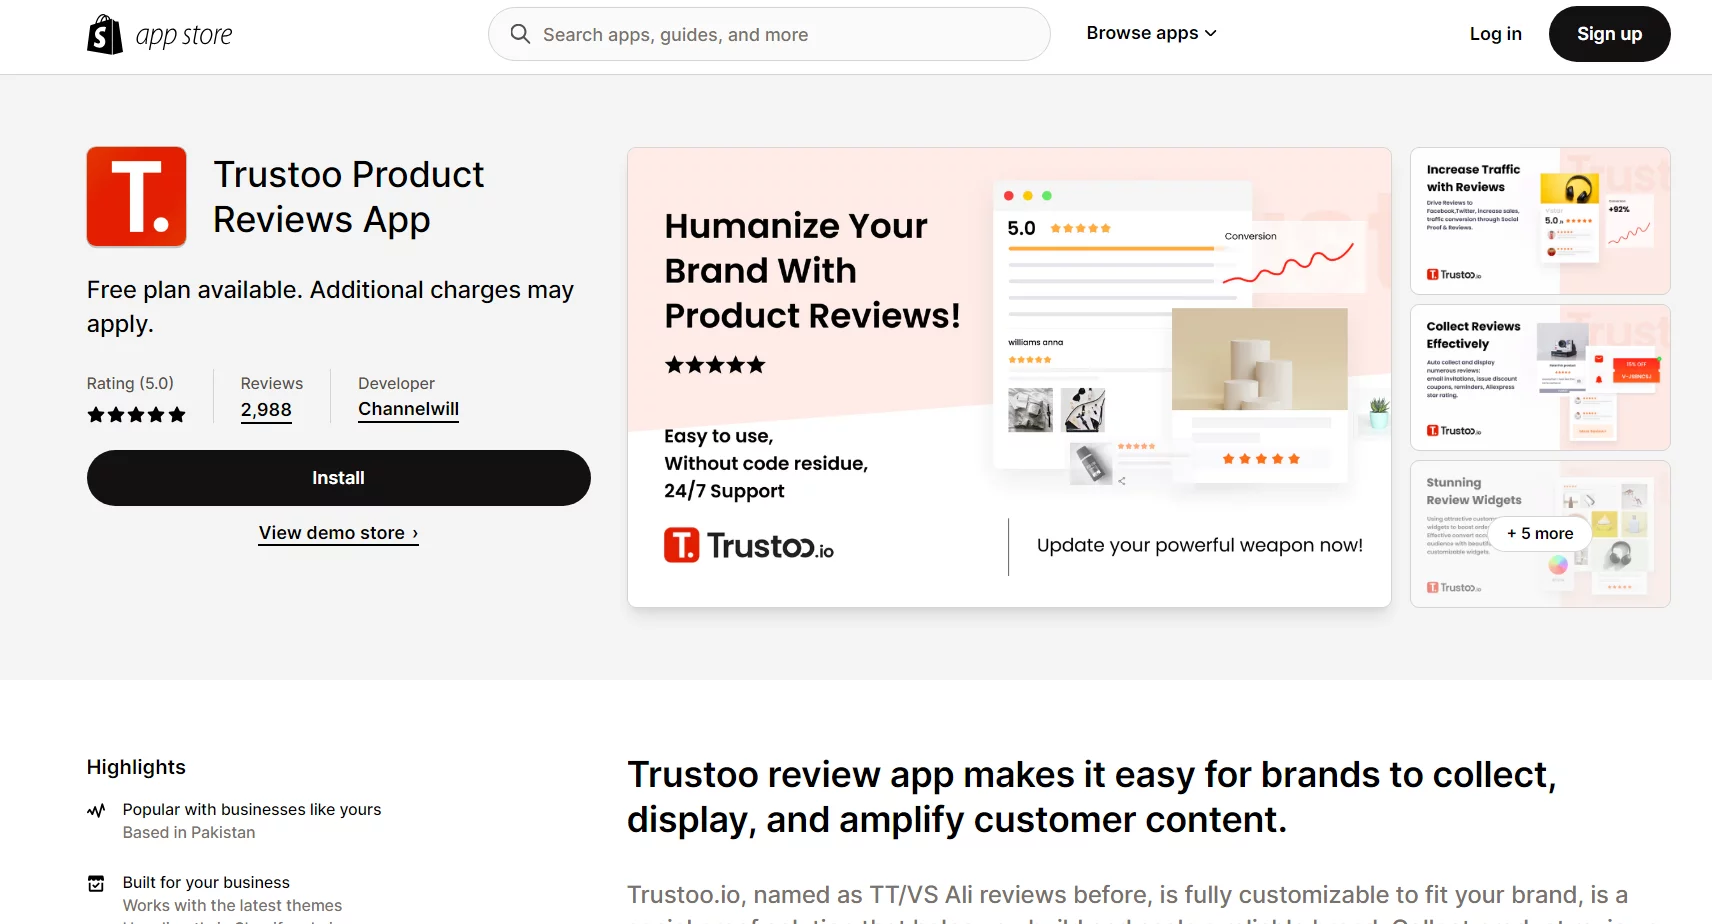 Trustoo Product Reviews App